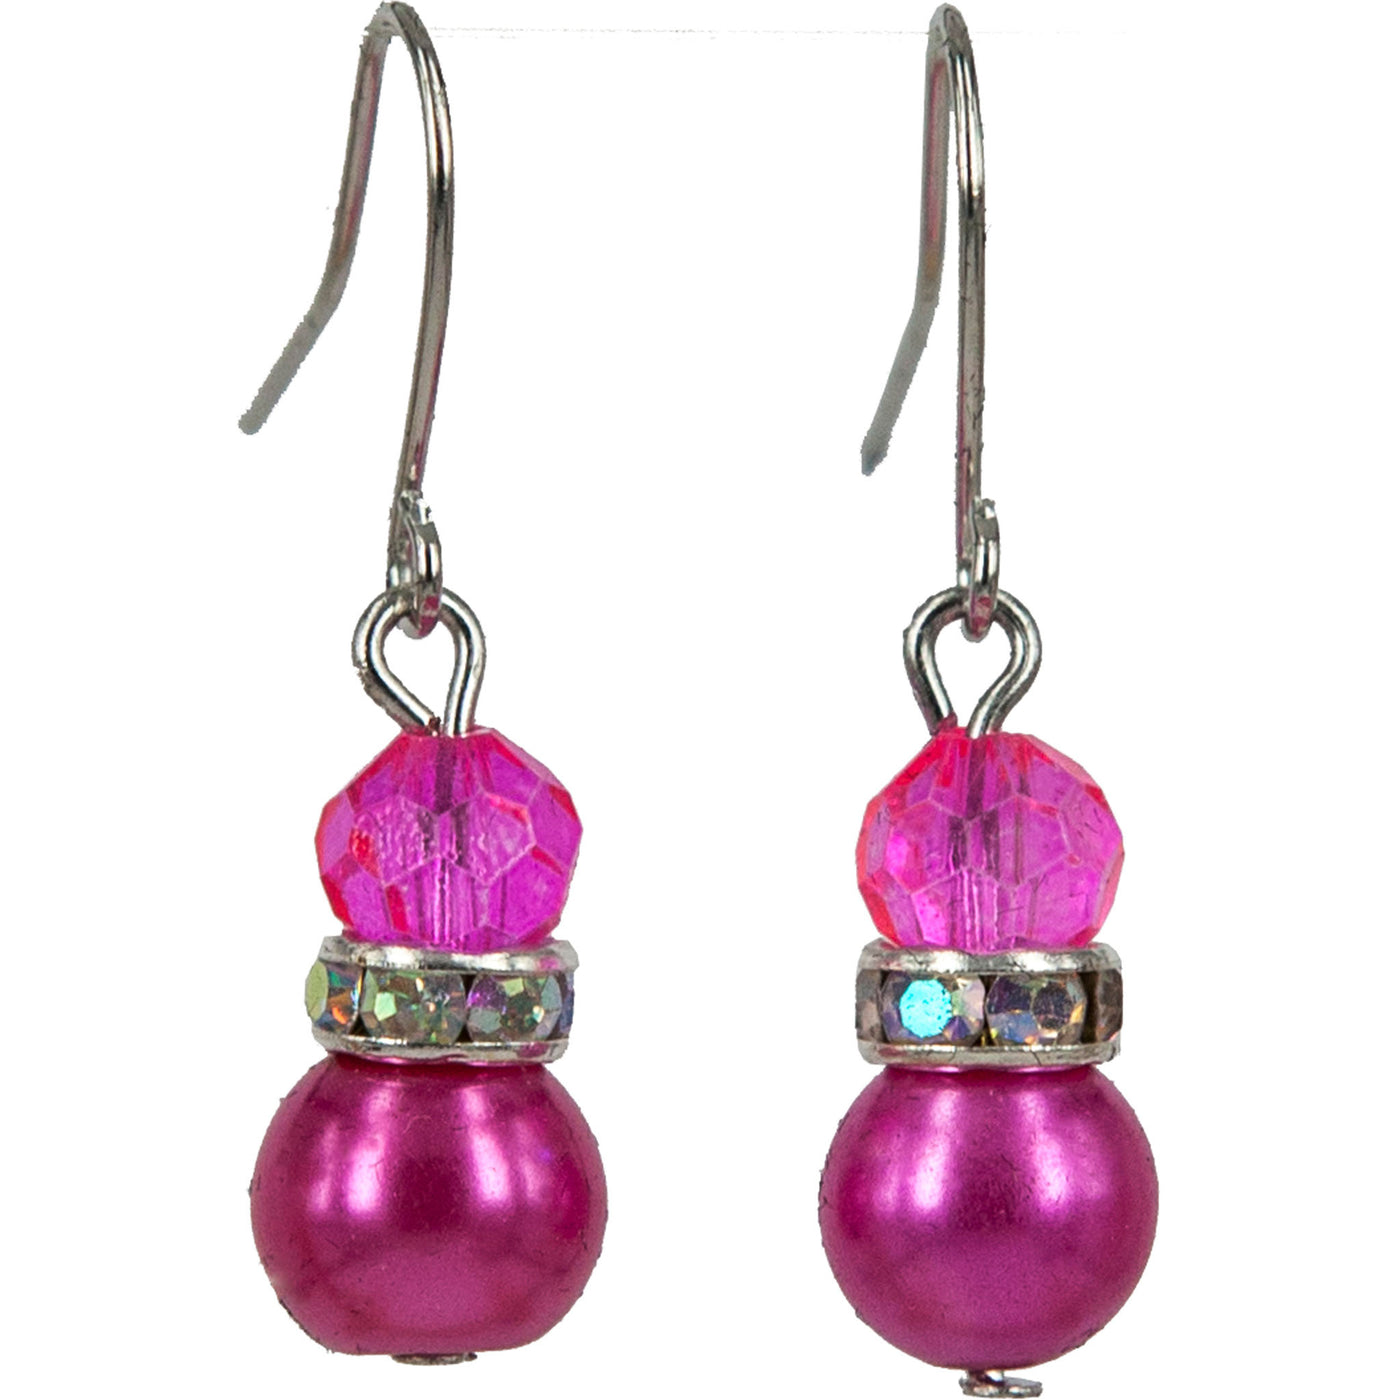 A hanging pearl earrings